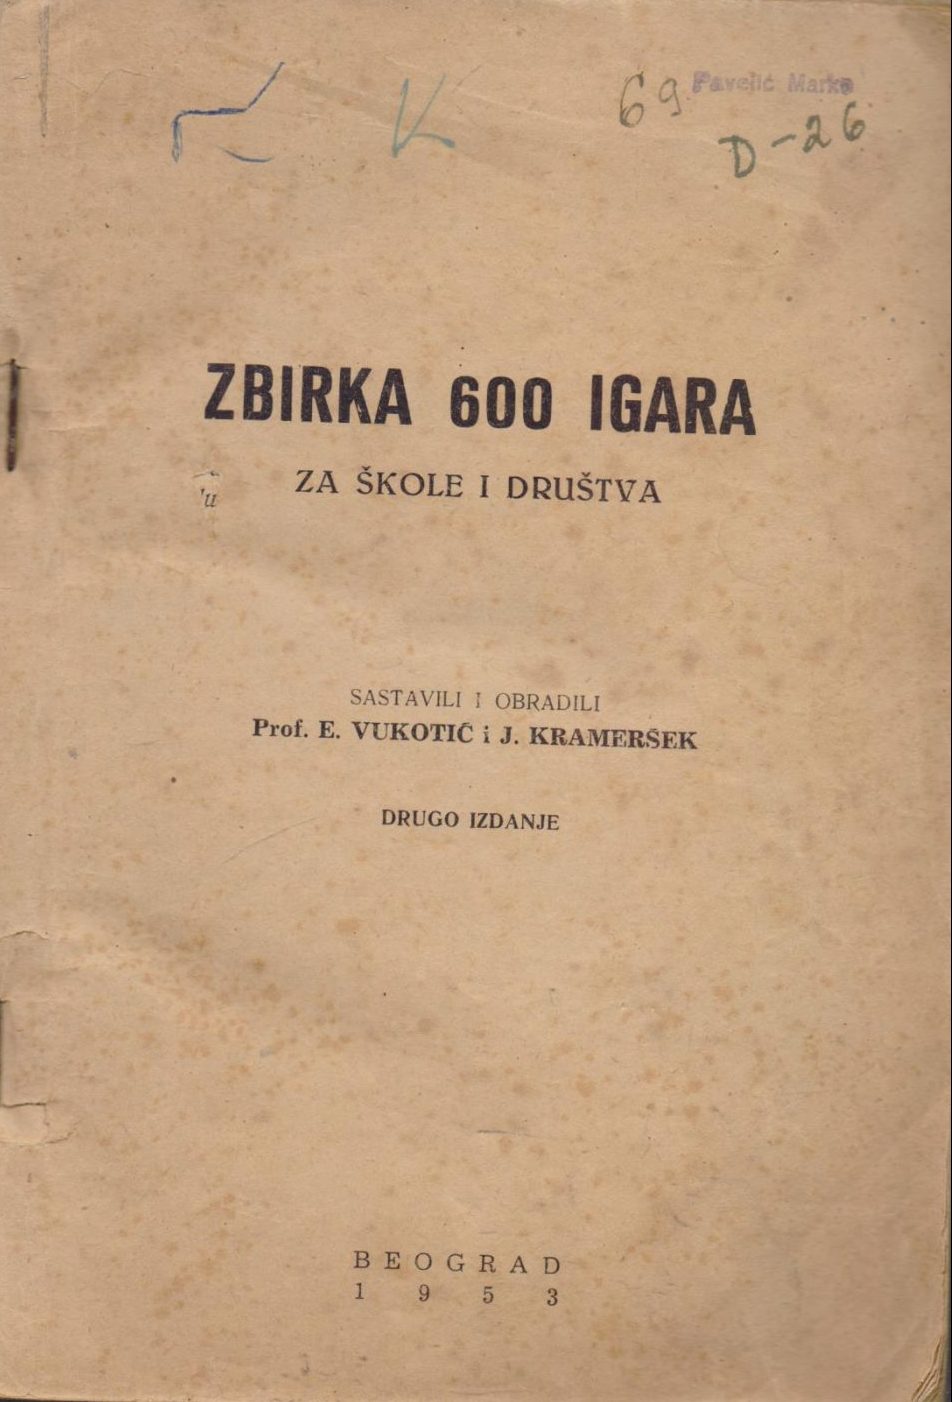 Zbirka 600 igara E. Vukotić i J. Krameršek